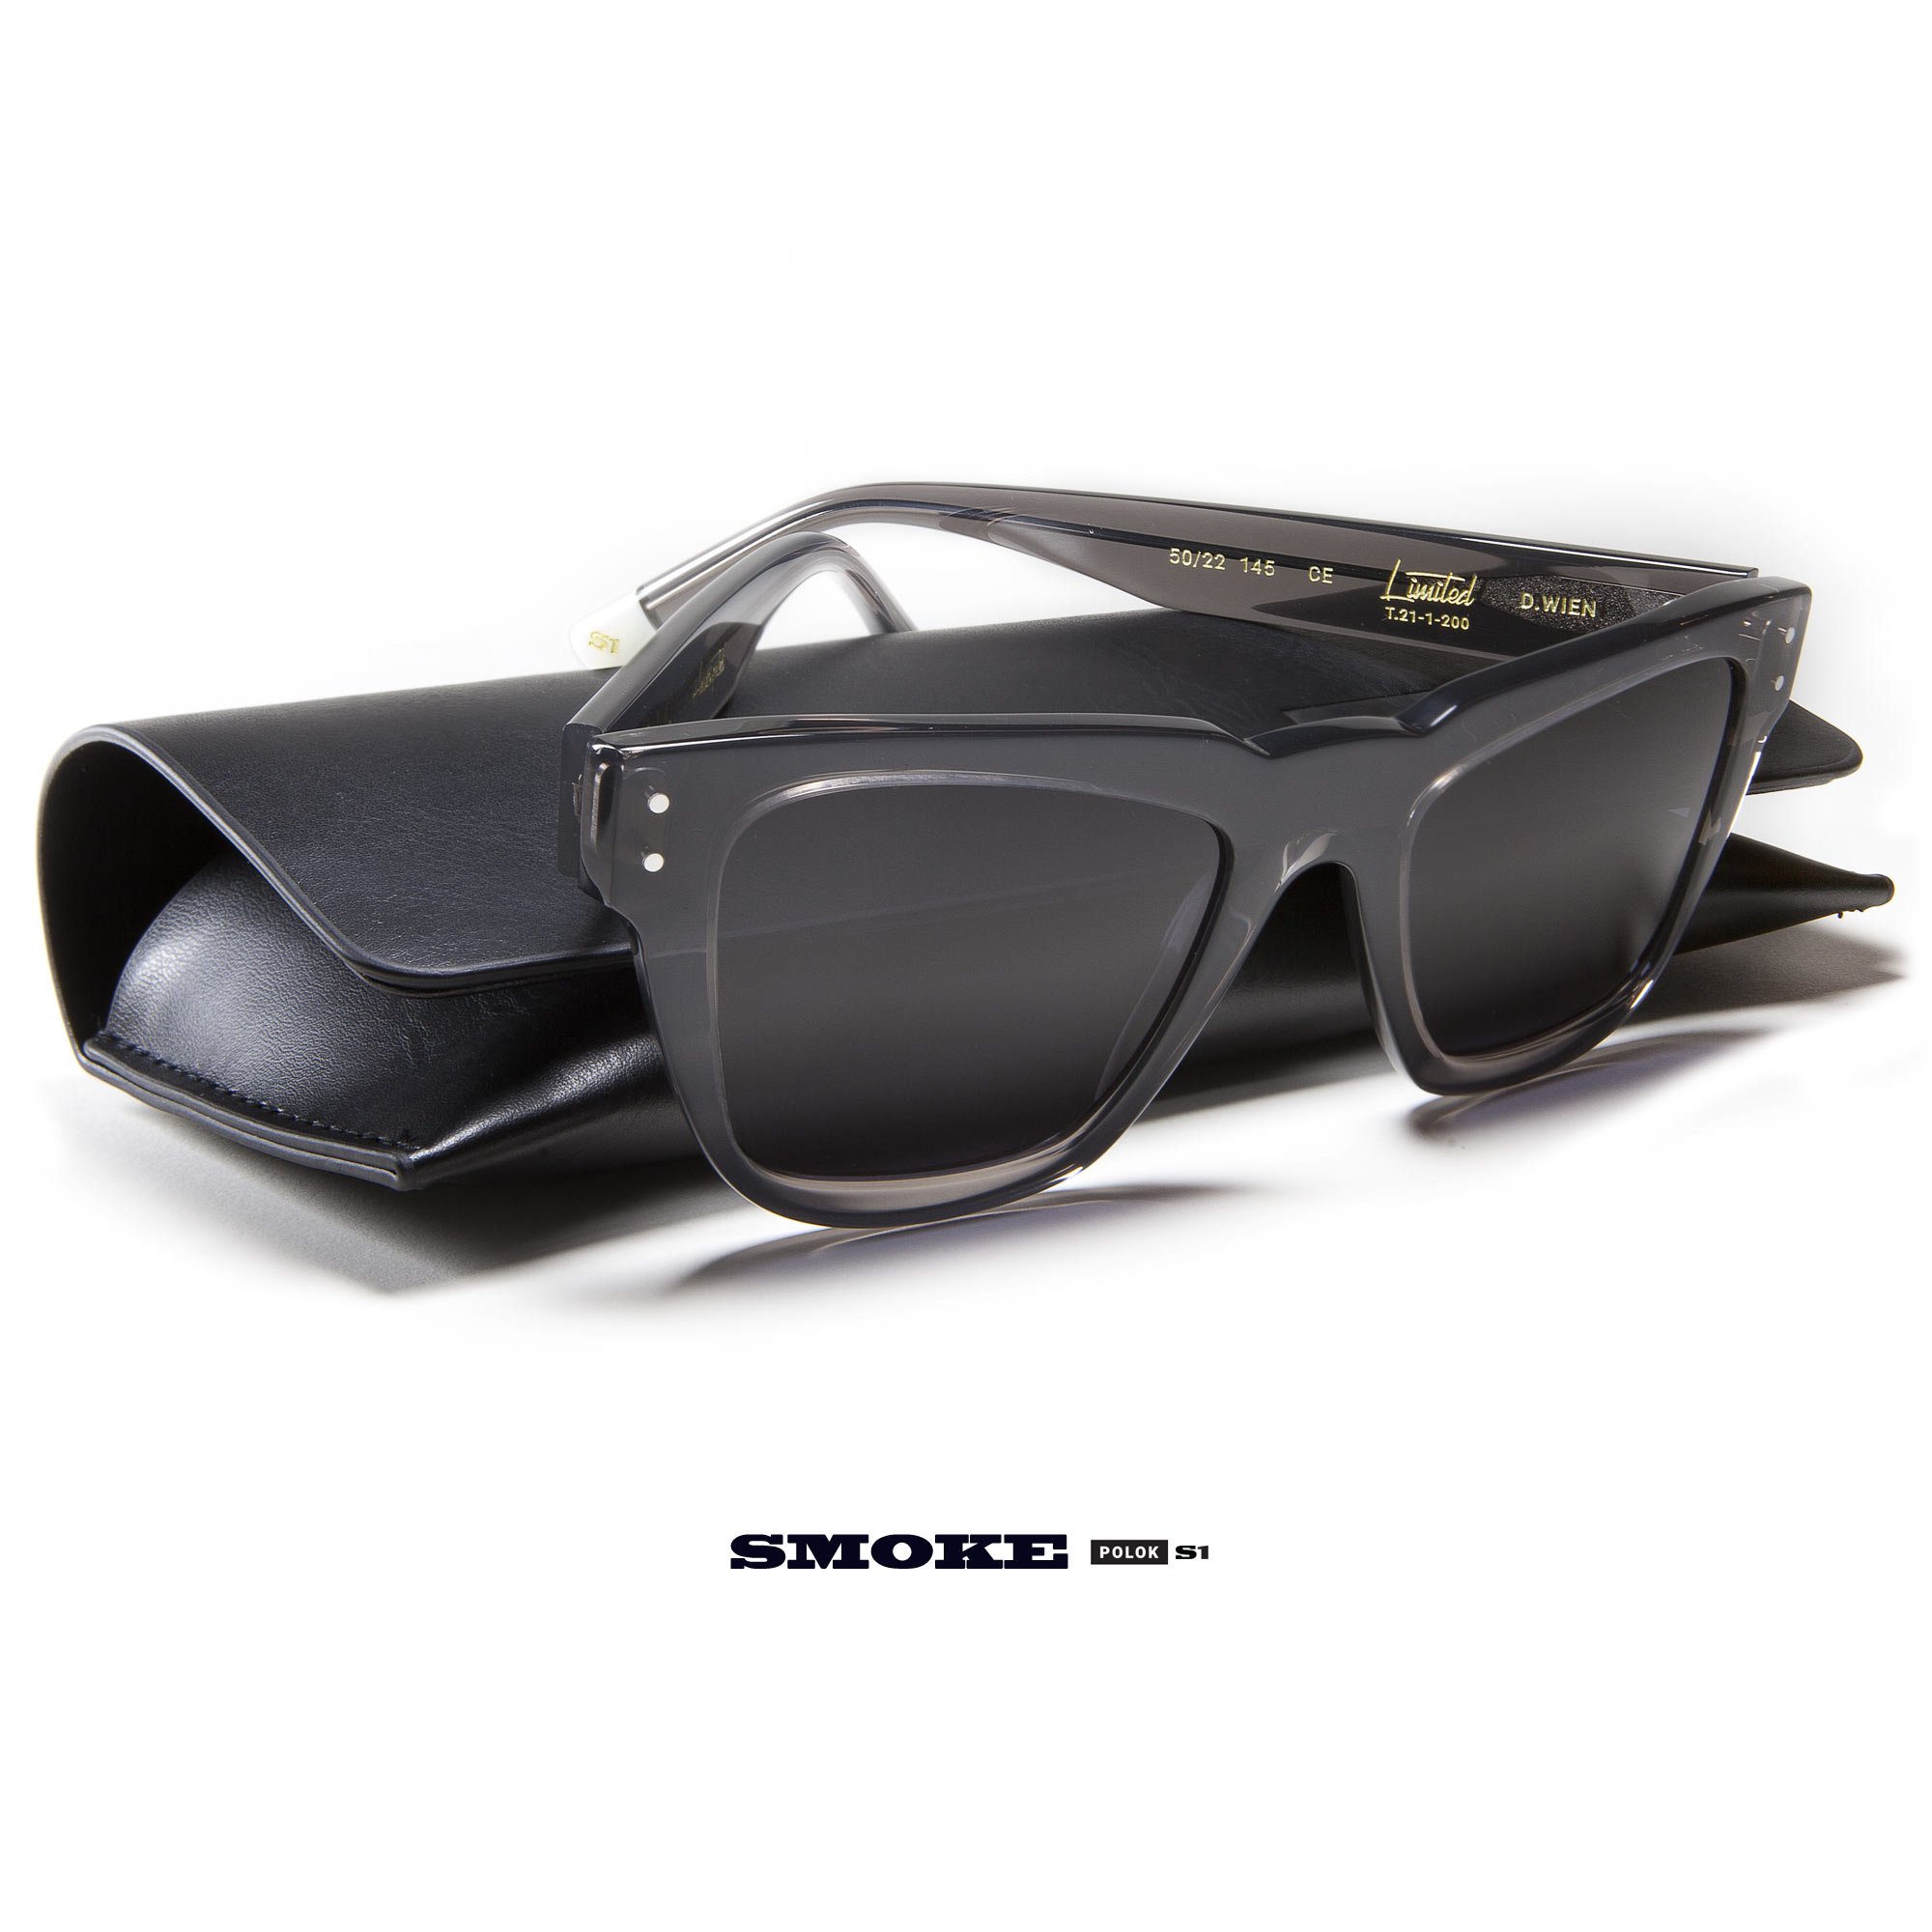 Polok_S1_smoke_Sunglasses_Best_online_store_trendy_Rob_adalierd_designer_Vienna_LA_Los-Angeles_Canada_addicted_to_the_Sun.jpg